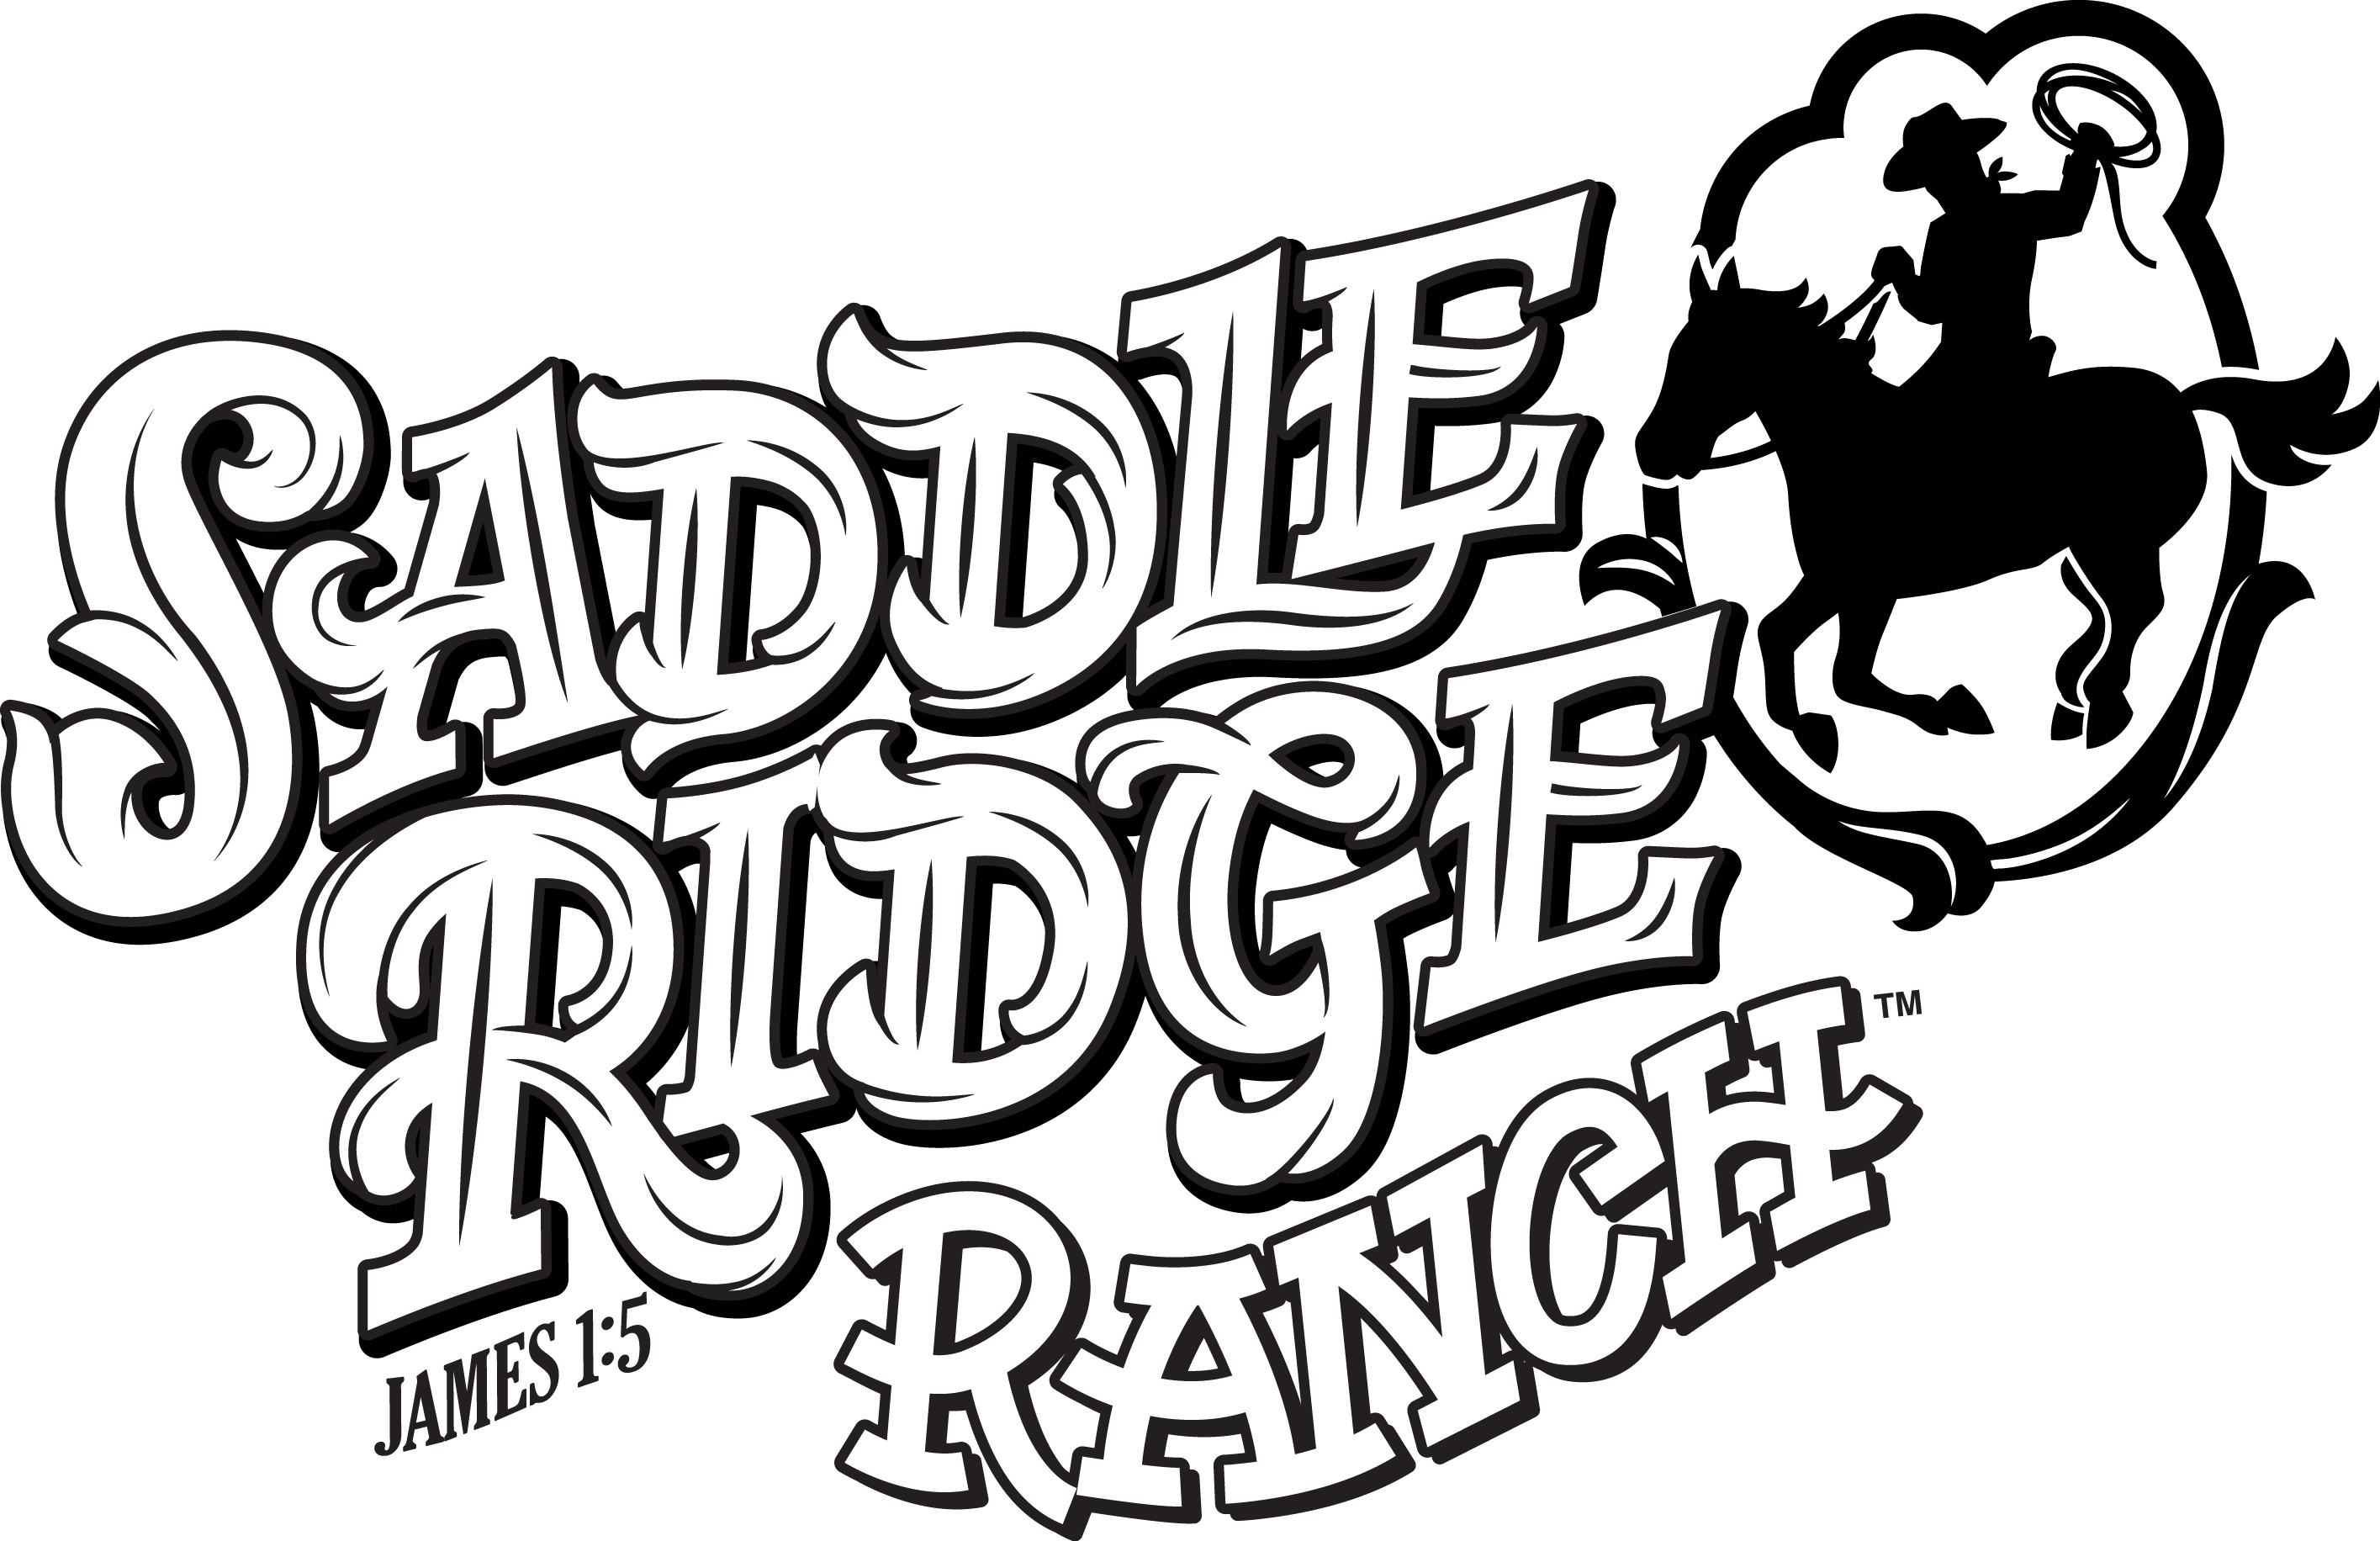 VBS 2010 Saddle Ridge Ranch Adult VBS Base Conference.